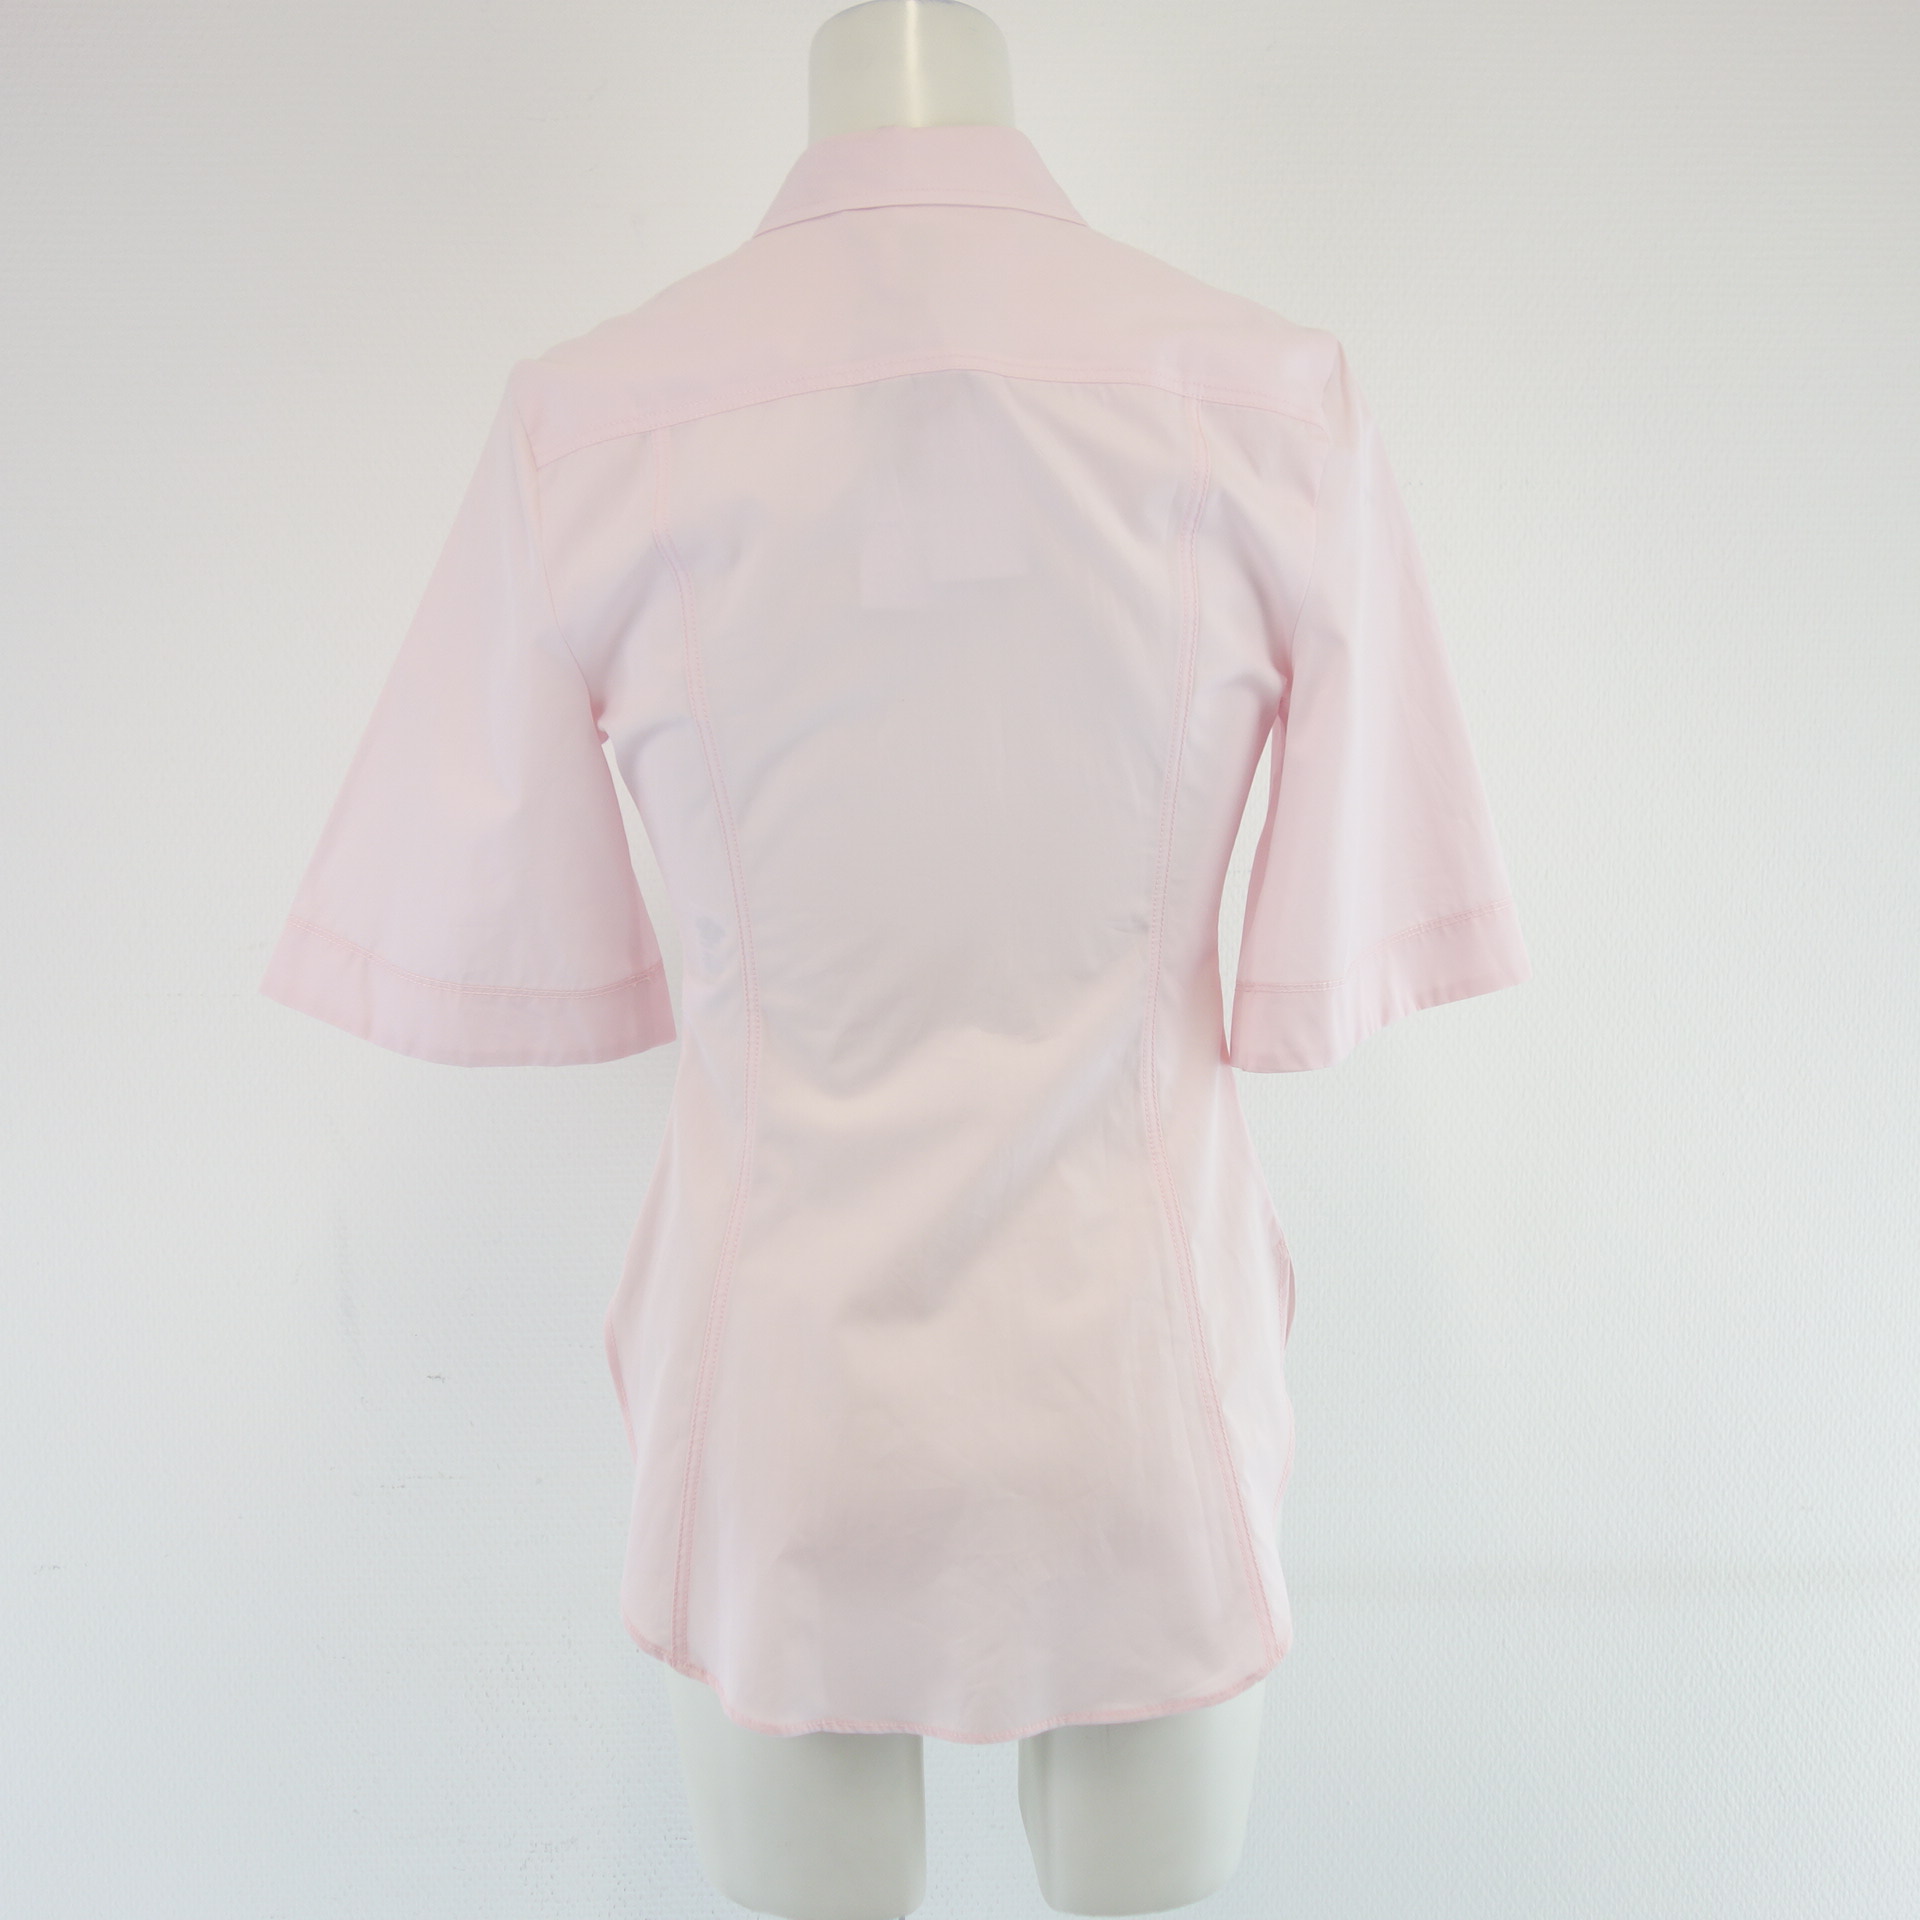 PAUL SMITH Damen Hemd Shirt Tunika Bluse Oberteil Slim 100% Baumwolle Pastell Rosa